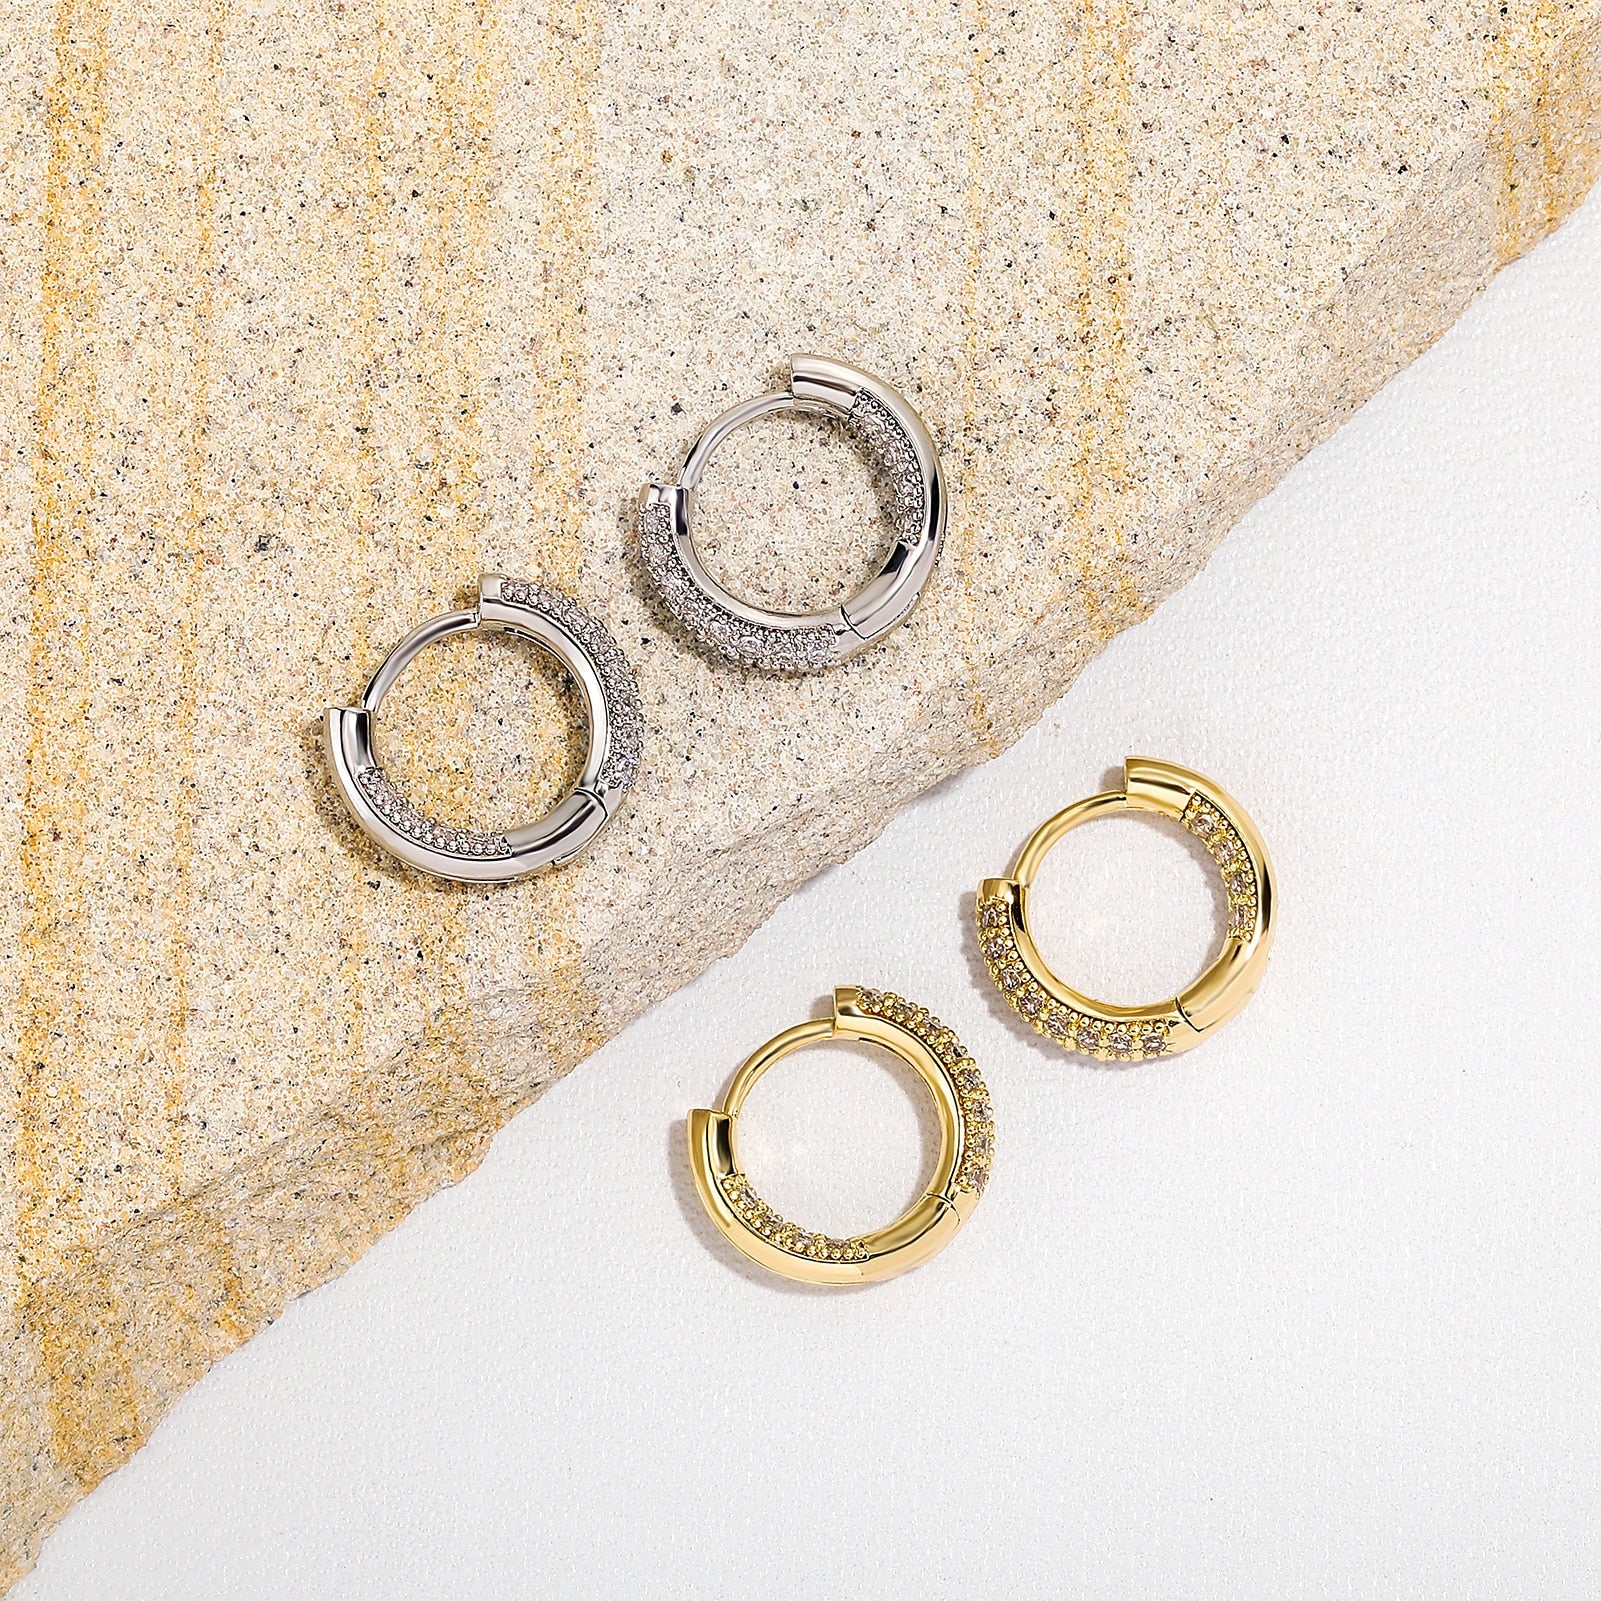 14k Gold | Micro Pave Diamond Huggie Earrings | Hip Hop Diamond Earrings